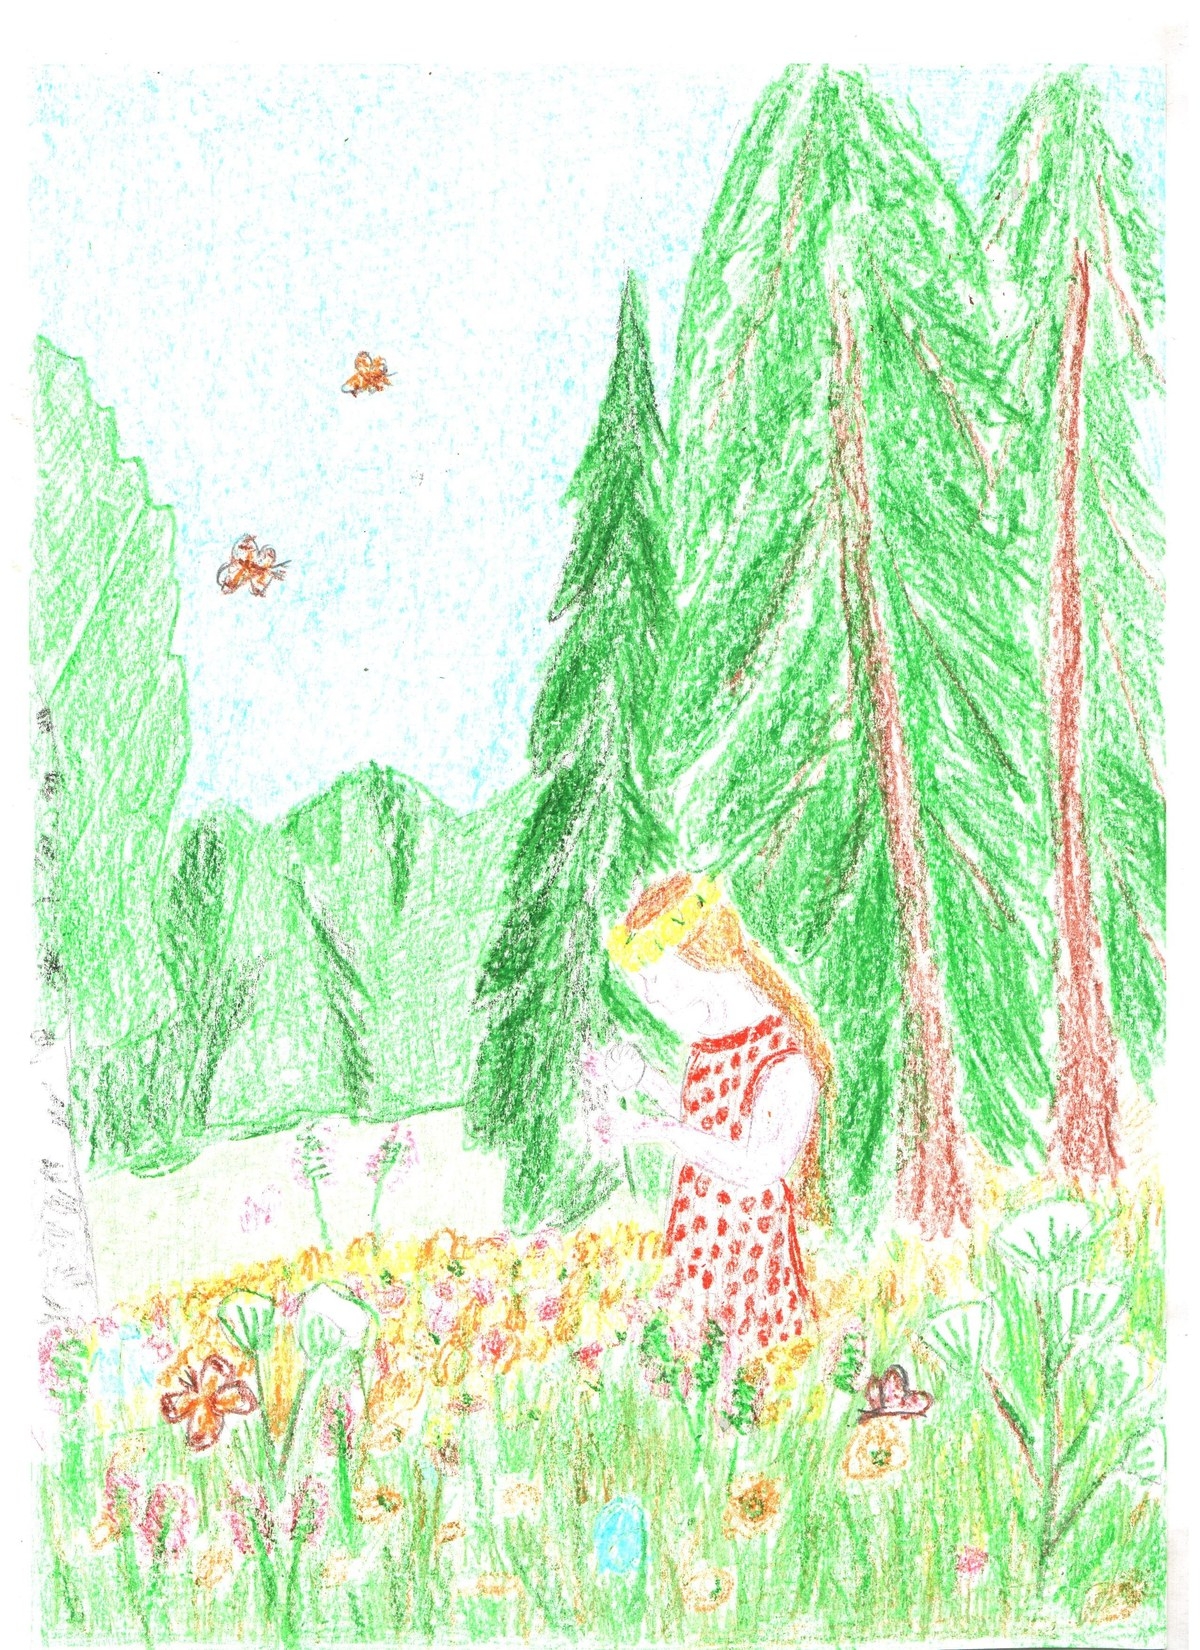 Васюткино озеро иллюстрация карандашом. Иллюстрация к эпизоду Васюткино озеро. Иллюстрация к рассказу Васюткино озеро. Пришвин кладовая солнца иллюстрации. Иллюстрация нарисовать иллюстрацию по Васюткино озеро.